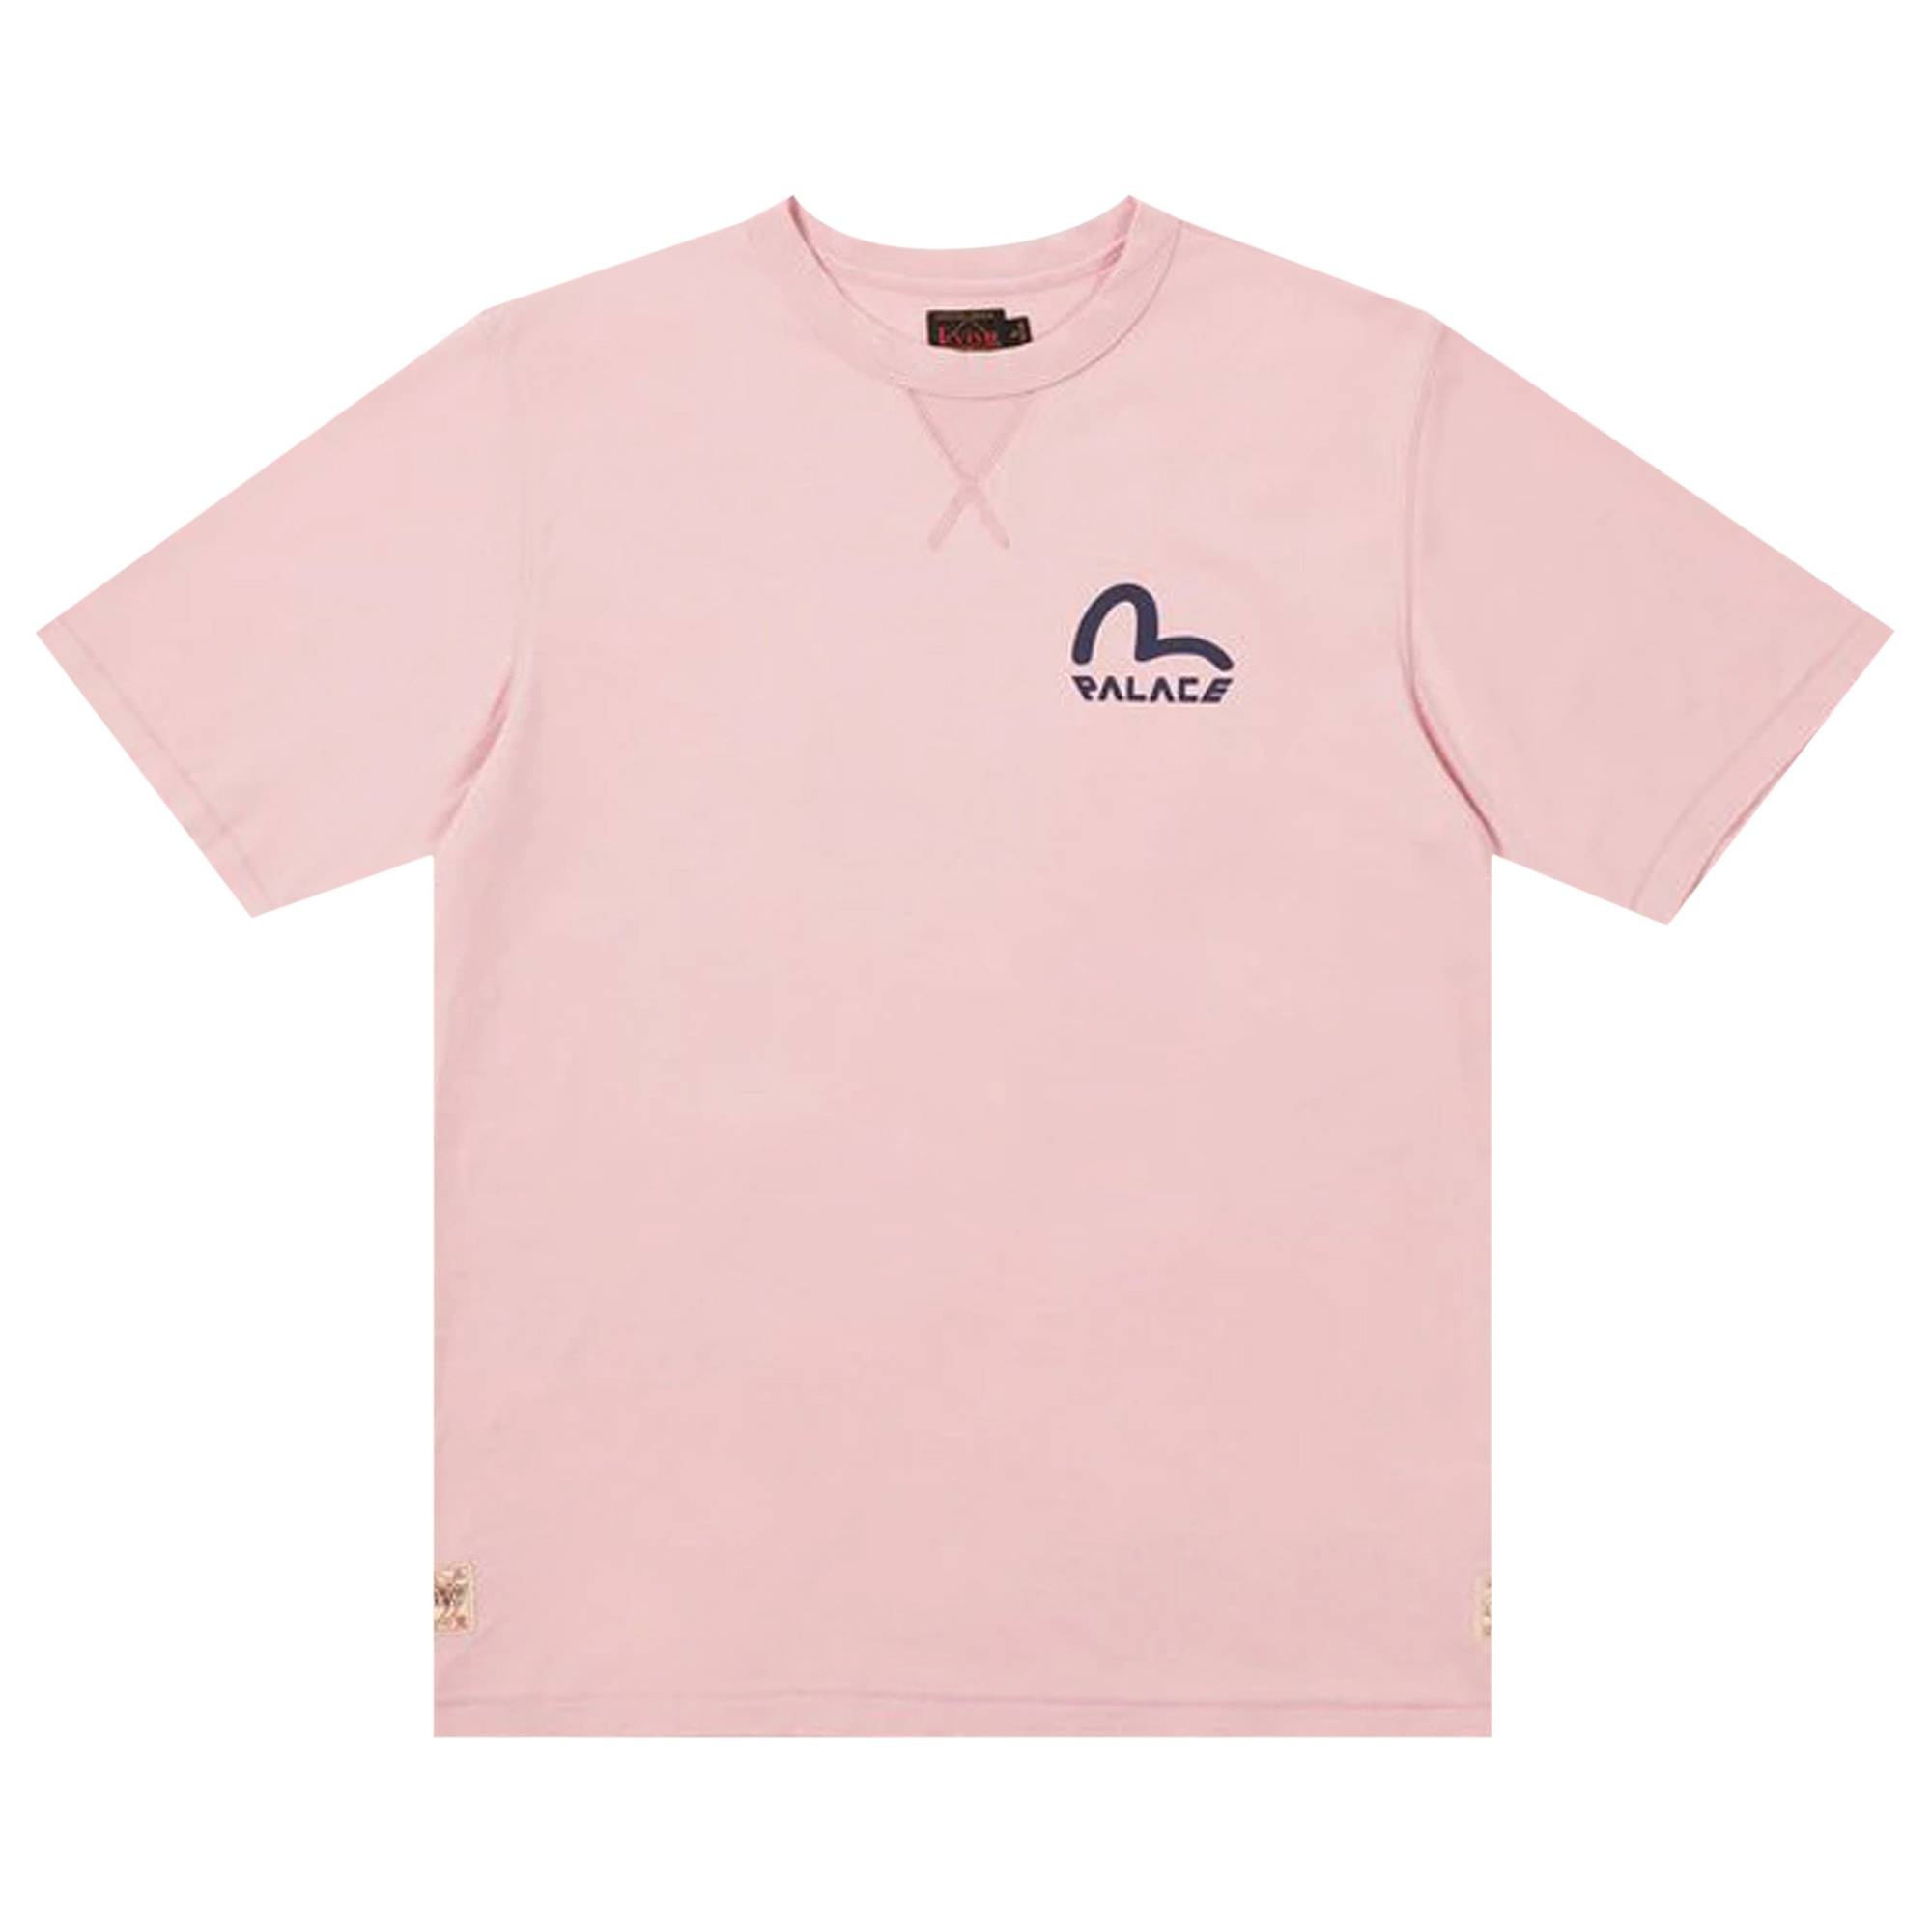 Palace x Evisu Seagull T-Shirt 'Pink Nectar' - 1